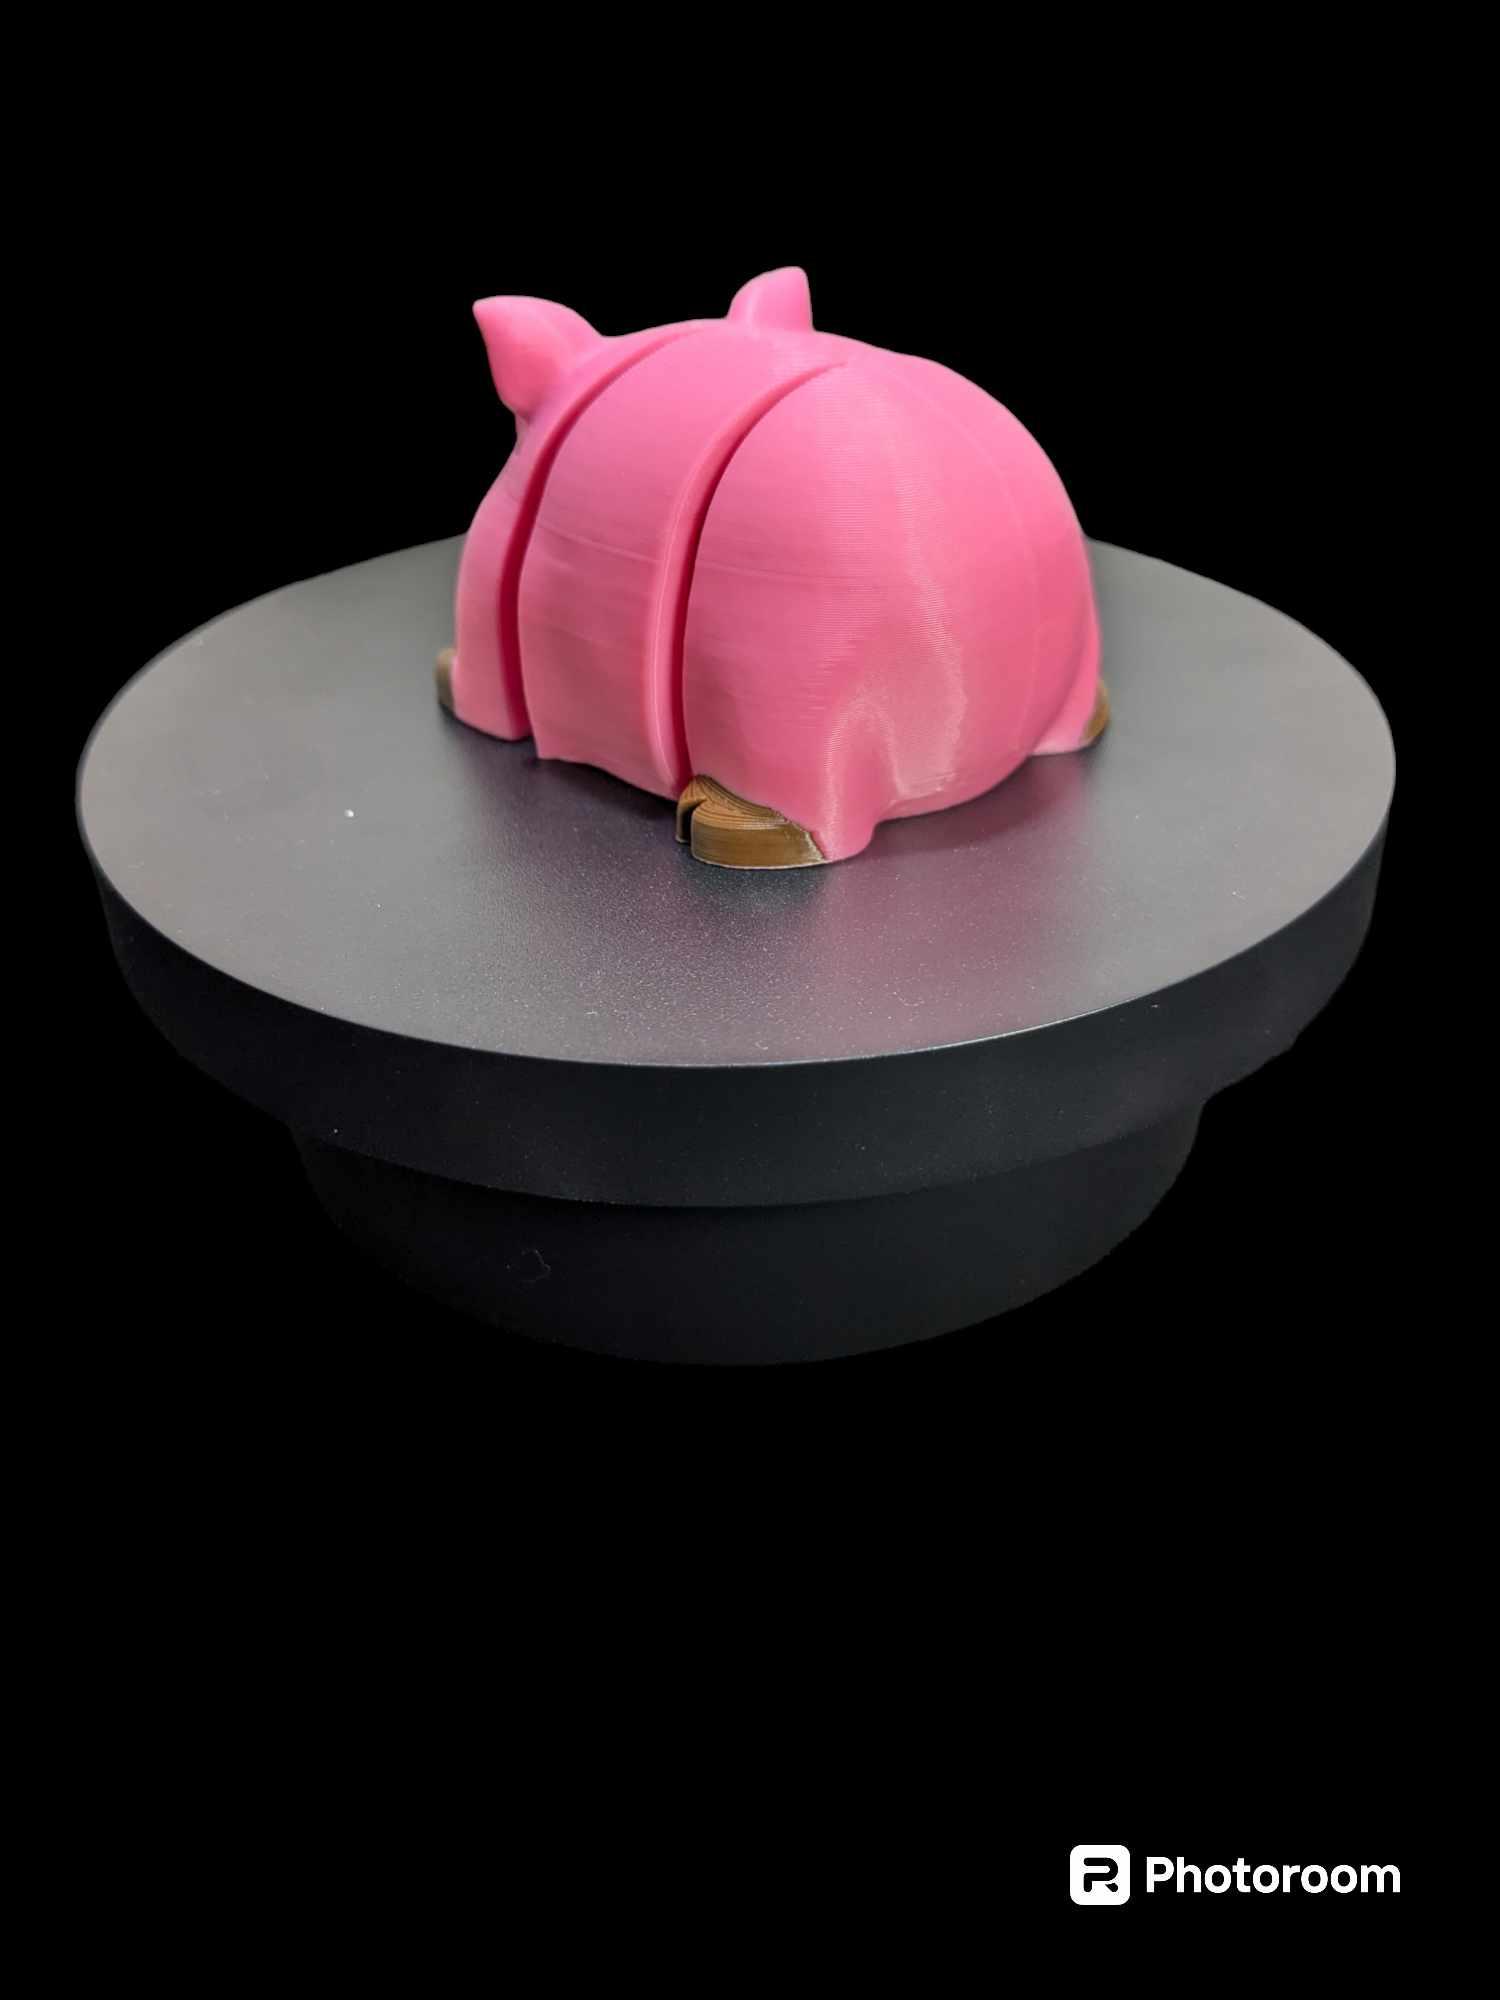 Pork chop The Pig 3d model